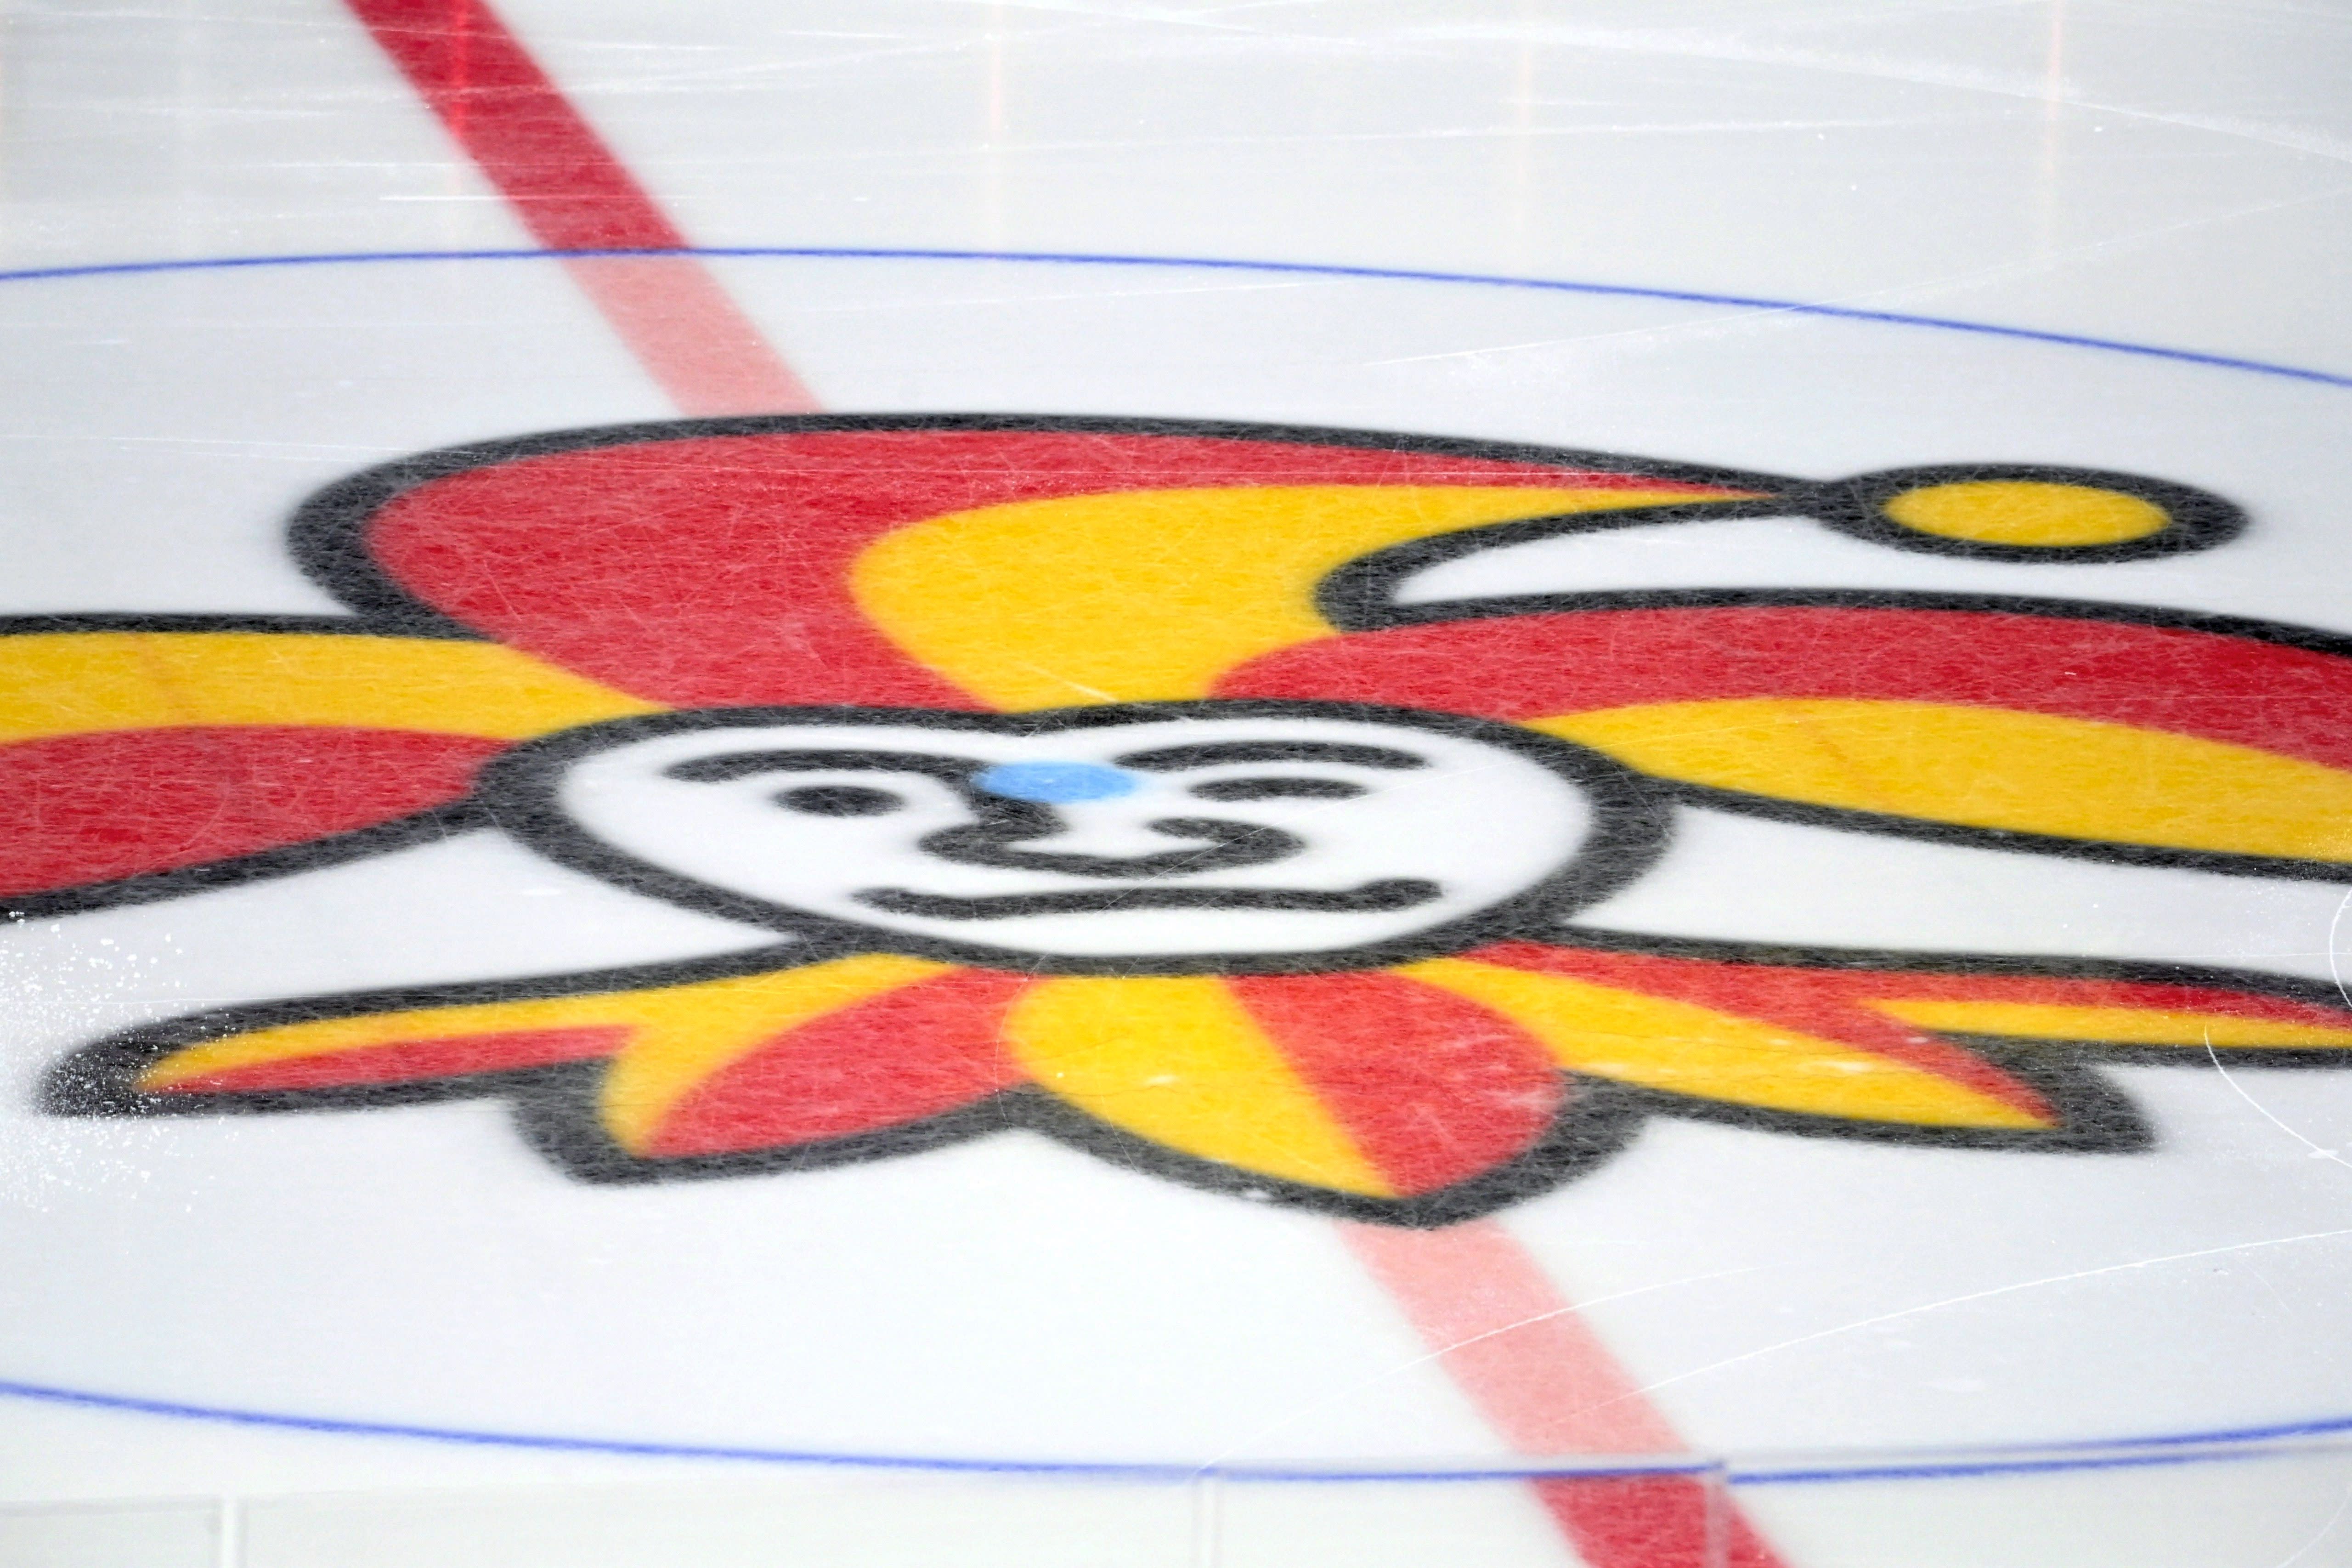 The Joker’s Eye returns to the Finnish Hockey League